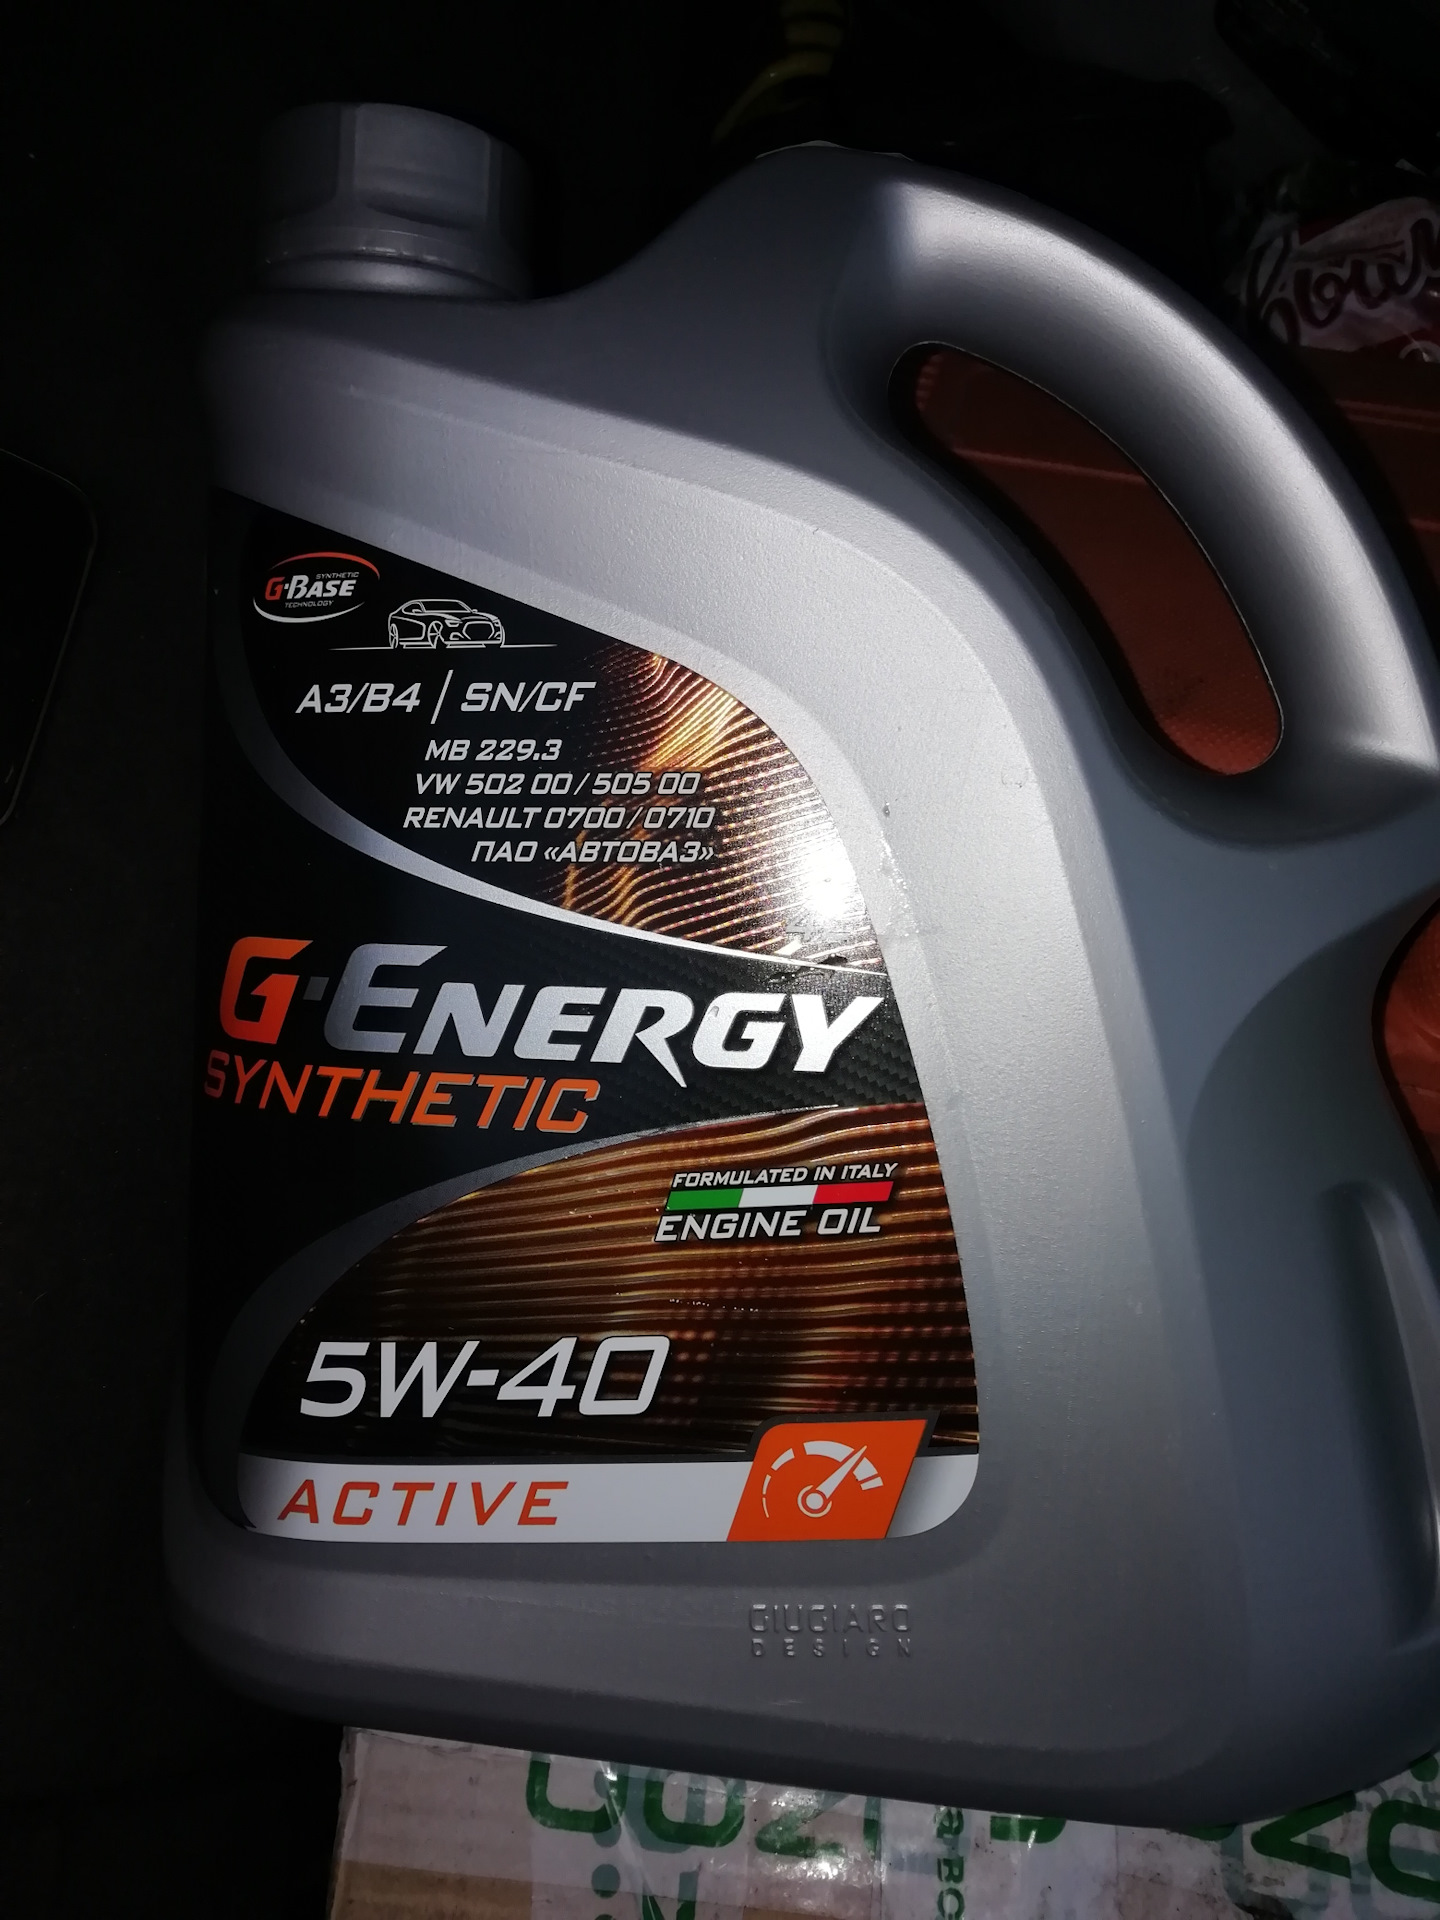 Лучшее масло g energy. G Energy 5w40 синтетика Active. G Energy Synthetic 5w40. G-Energy Synthetic Active 5w40 4л. Масло g Energy 5w40 синтетика Актив.